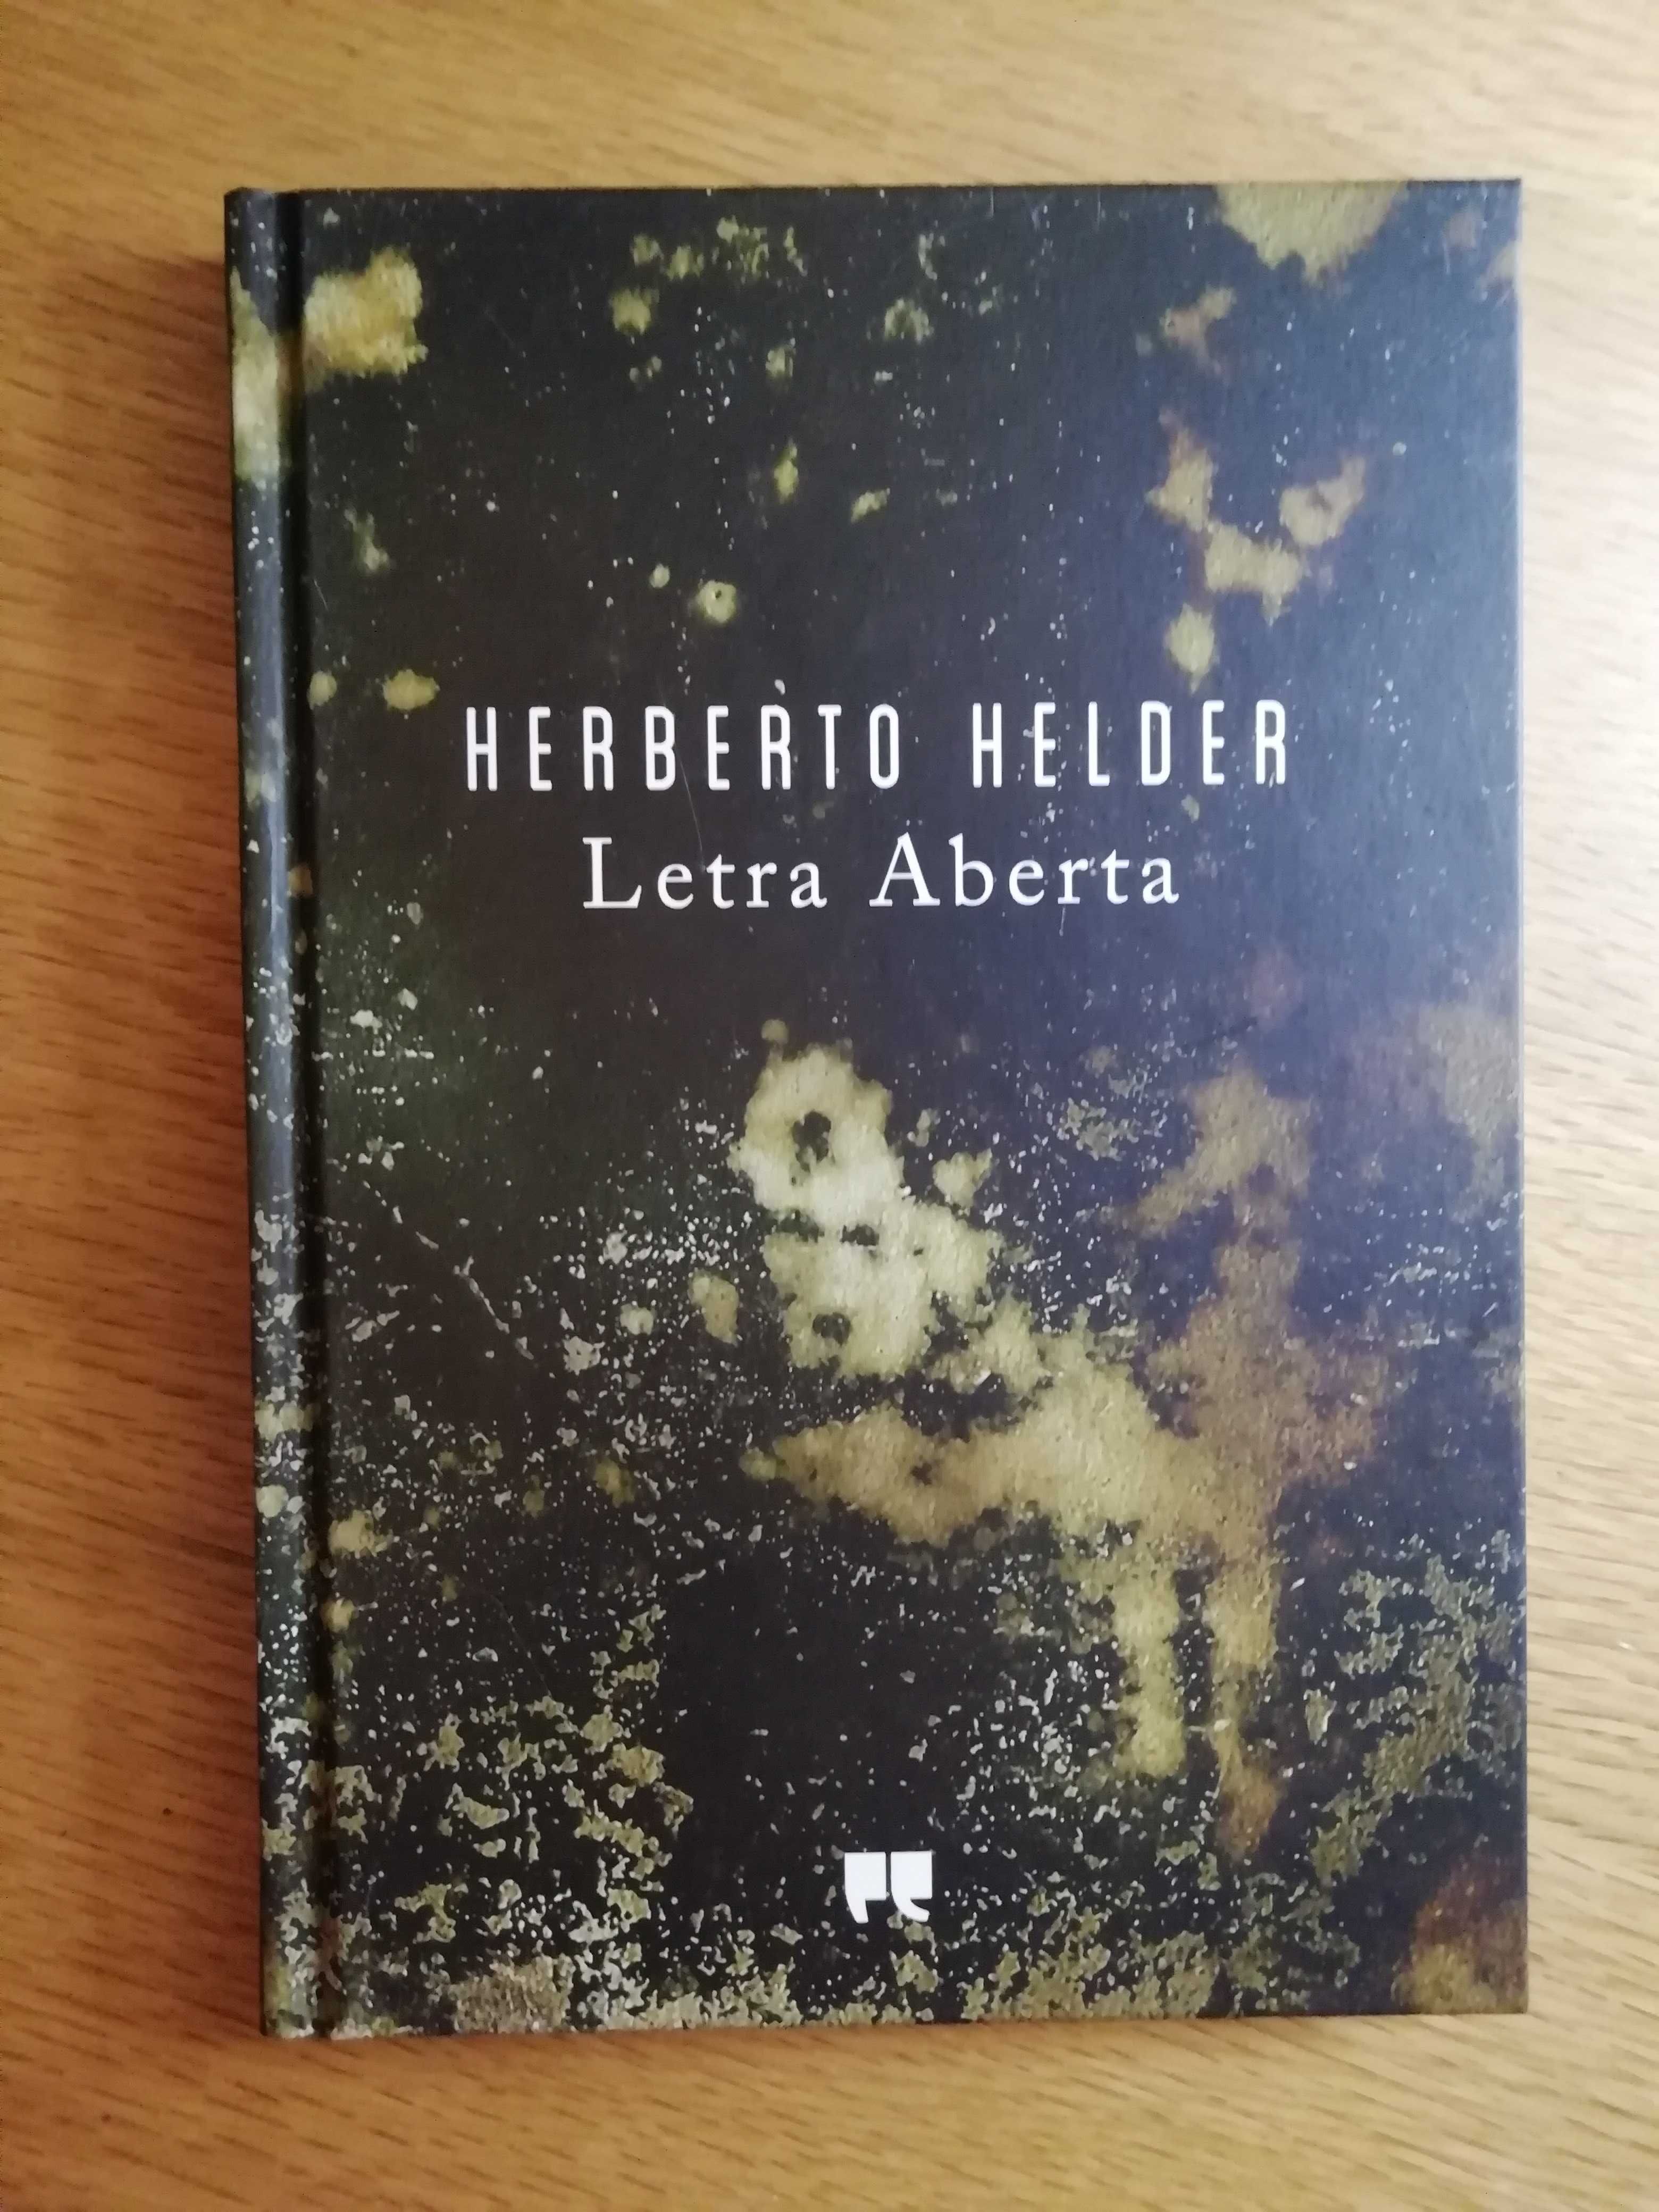 Herberto Hélder, Camões, Sá-Carneiro